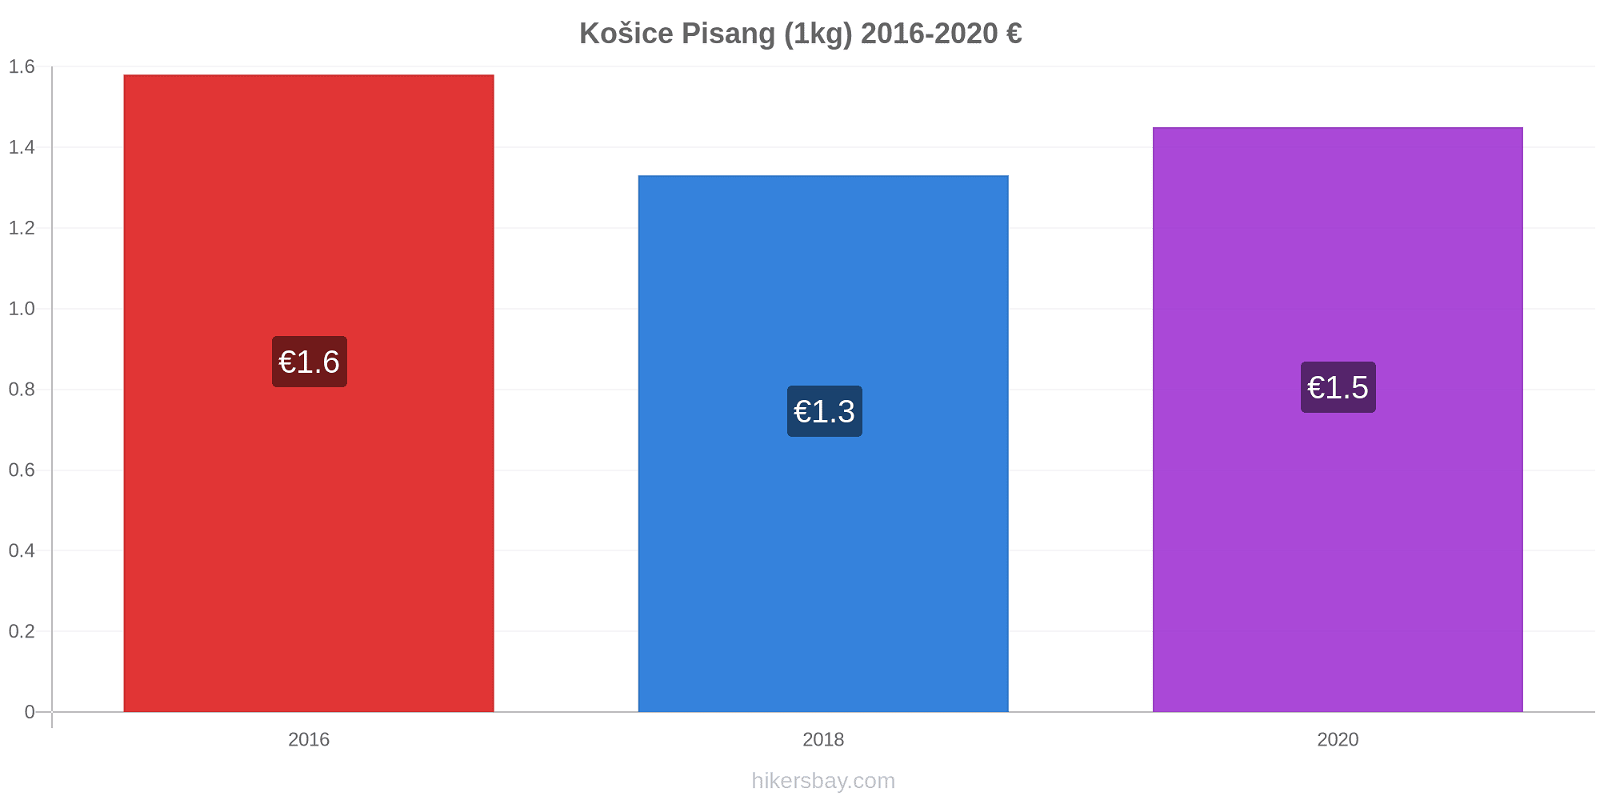 Košice perubahan harga Pisang (1kg) hikersbay.com